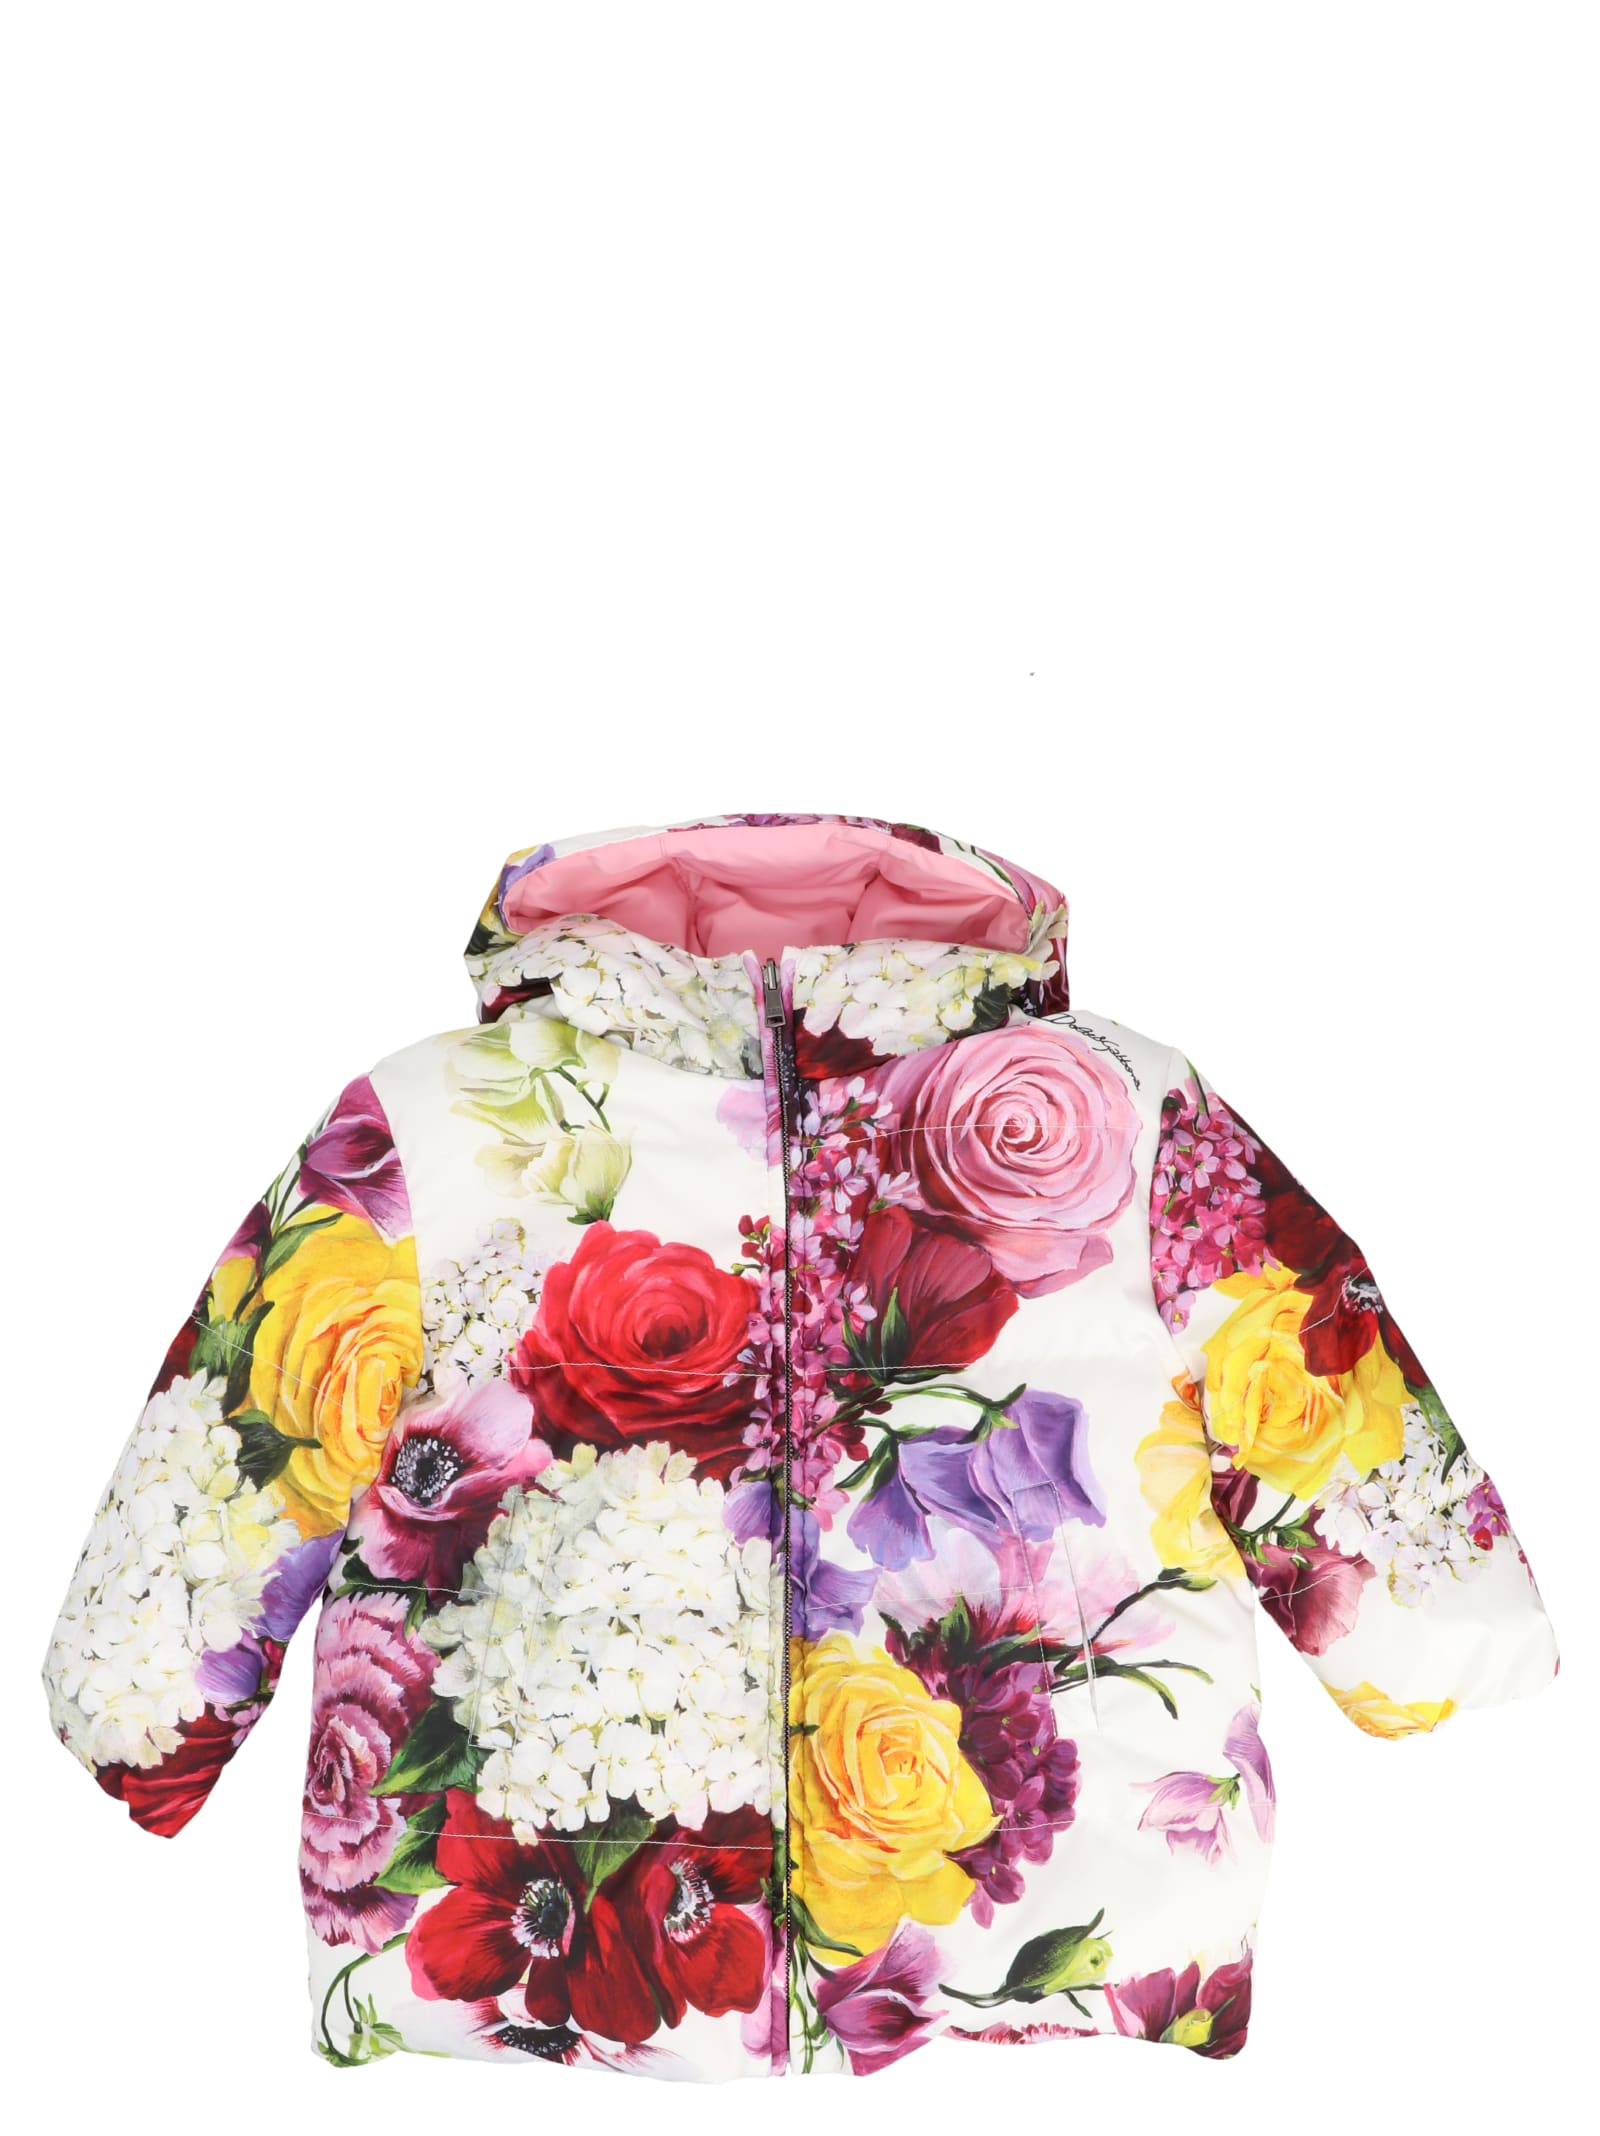 Dolce & Gabbana Floral Print Reversible Puffer Jacket